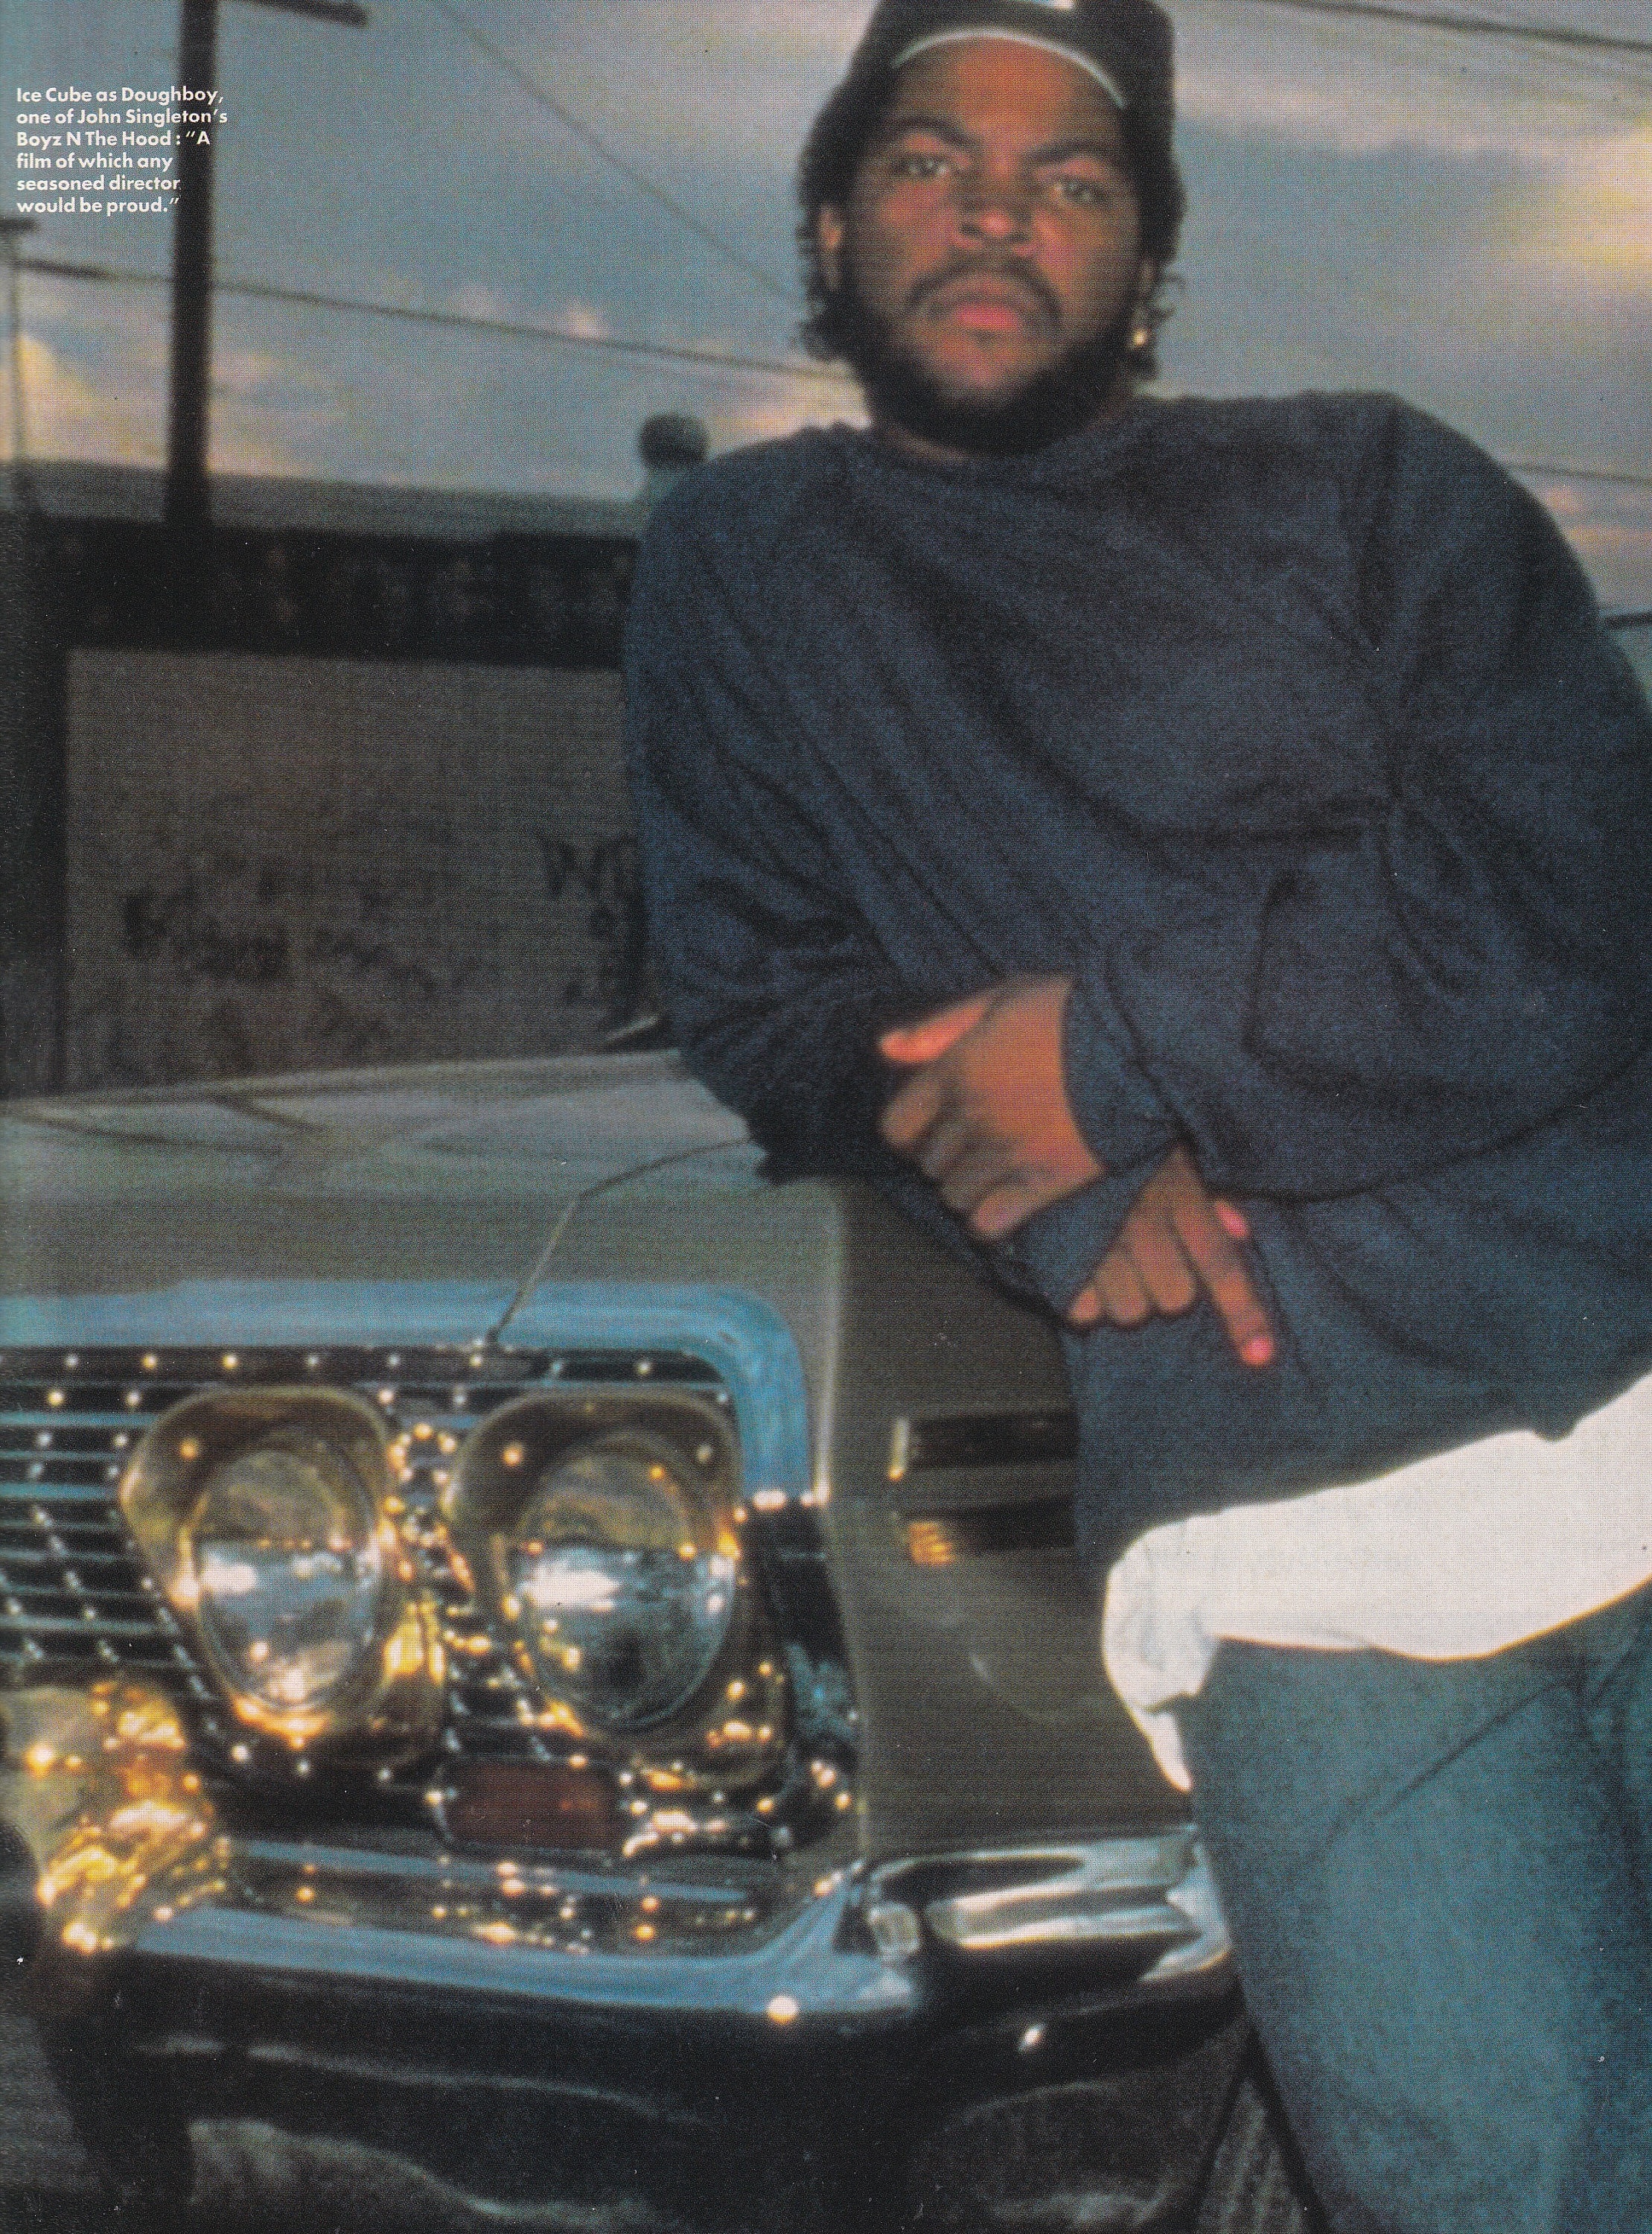 Cap, New Era Detroit Tigers of Doughboy (Ice Cube in Boyz N The Hood